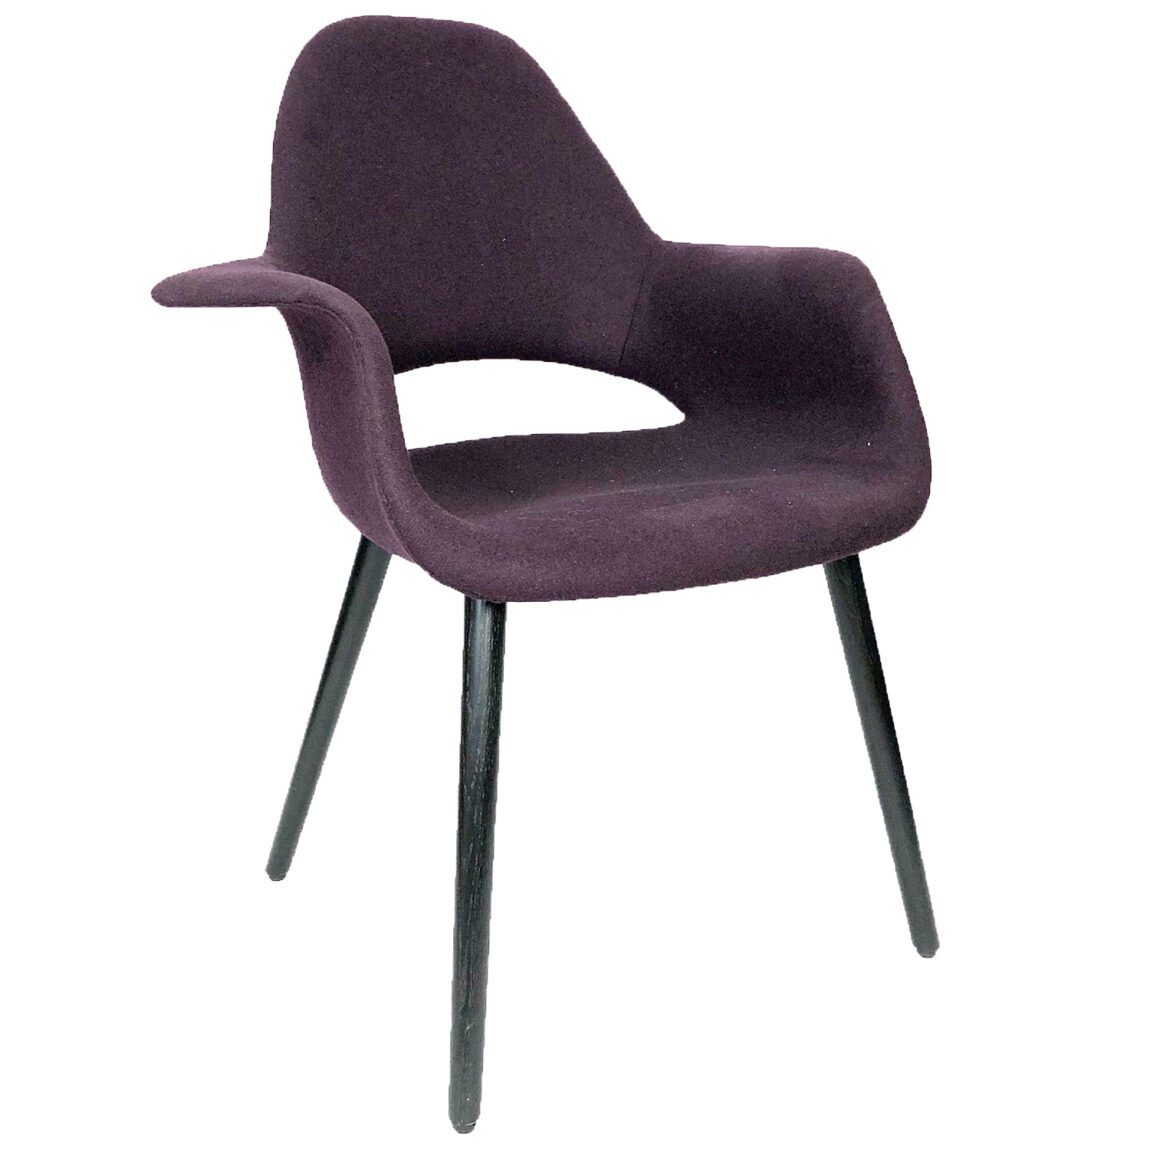 Výprodej Vitra designové židle Organic